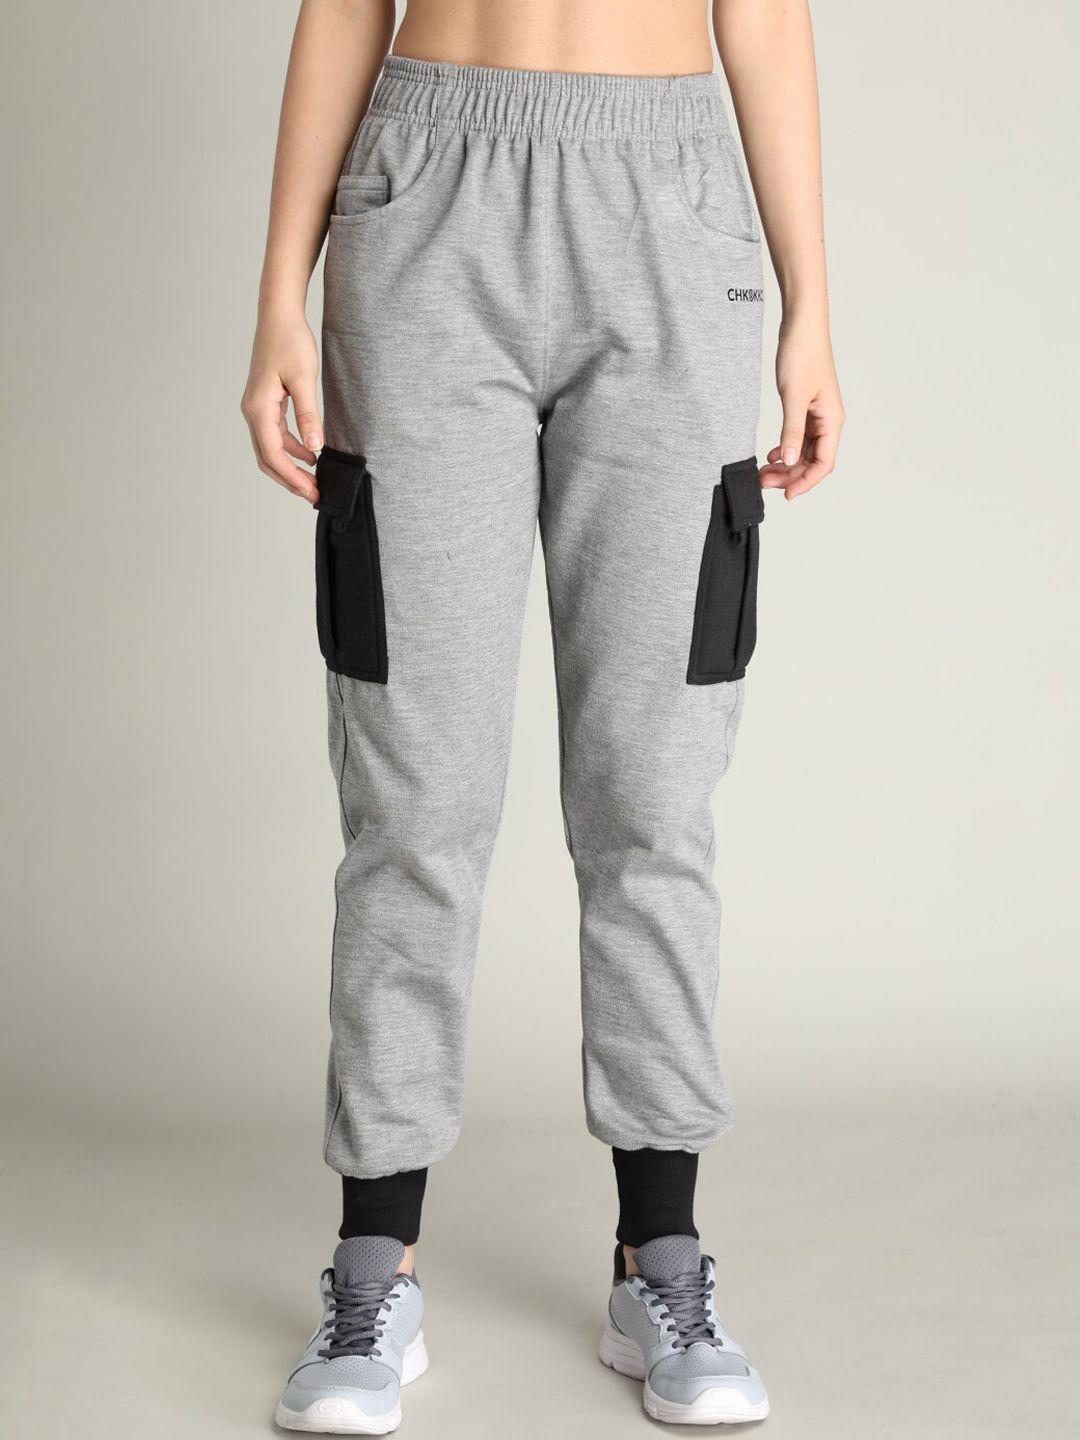 chkokko women black & grey colourblocked cotton track pants